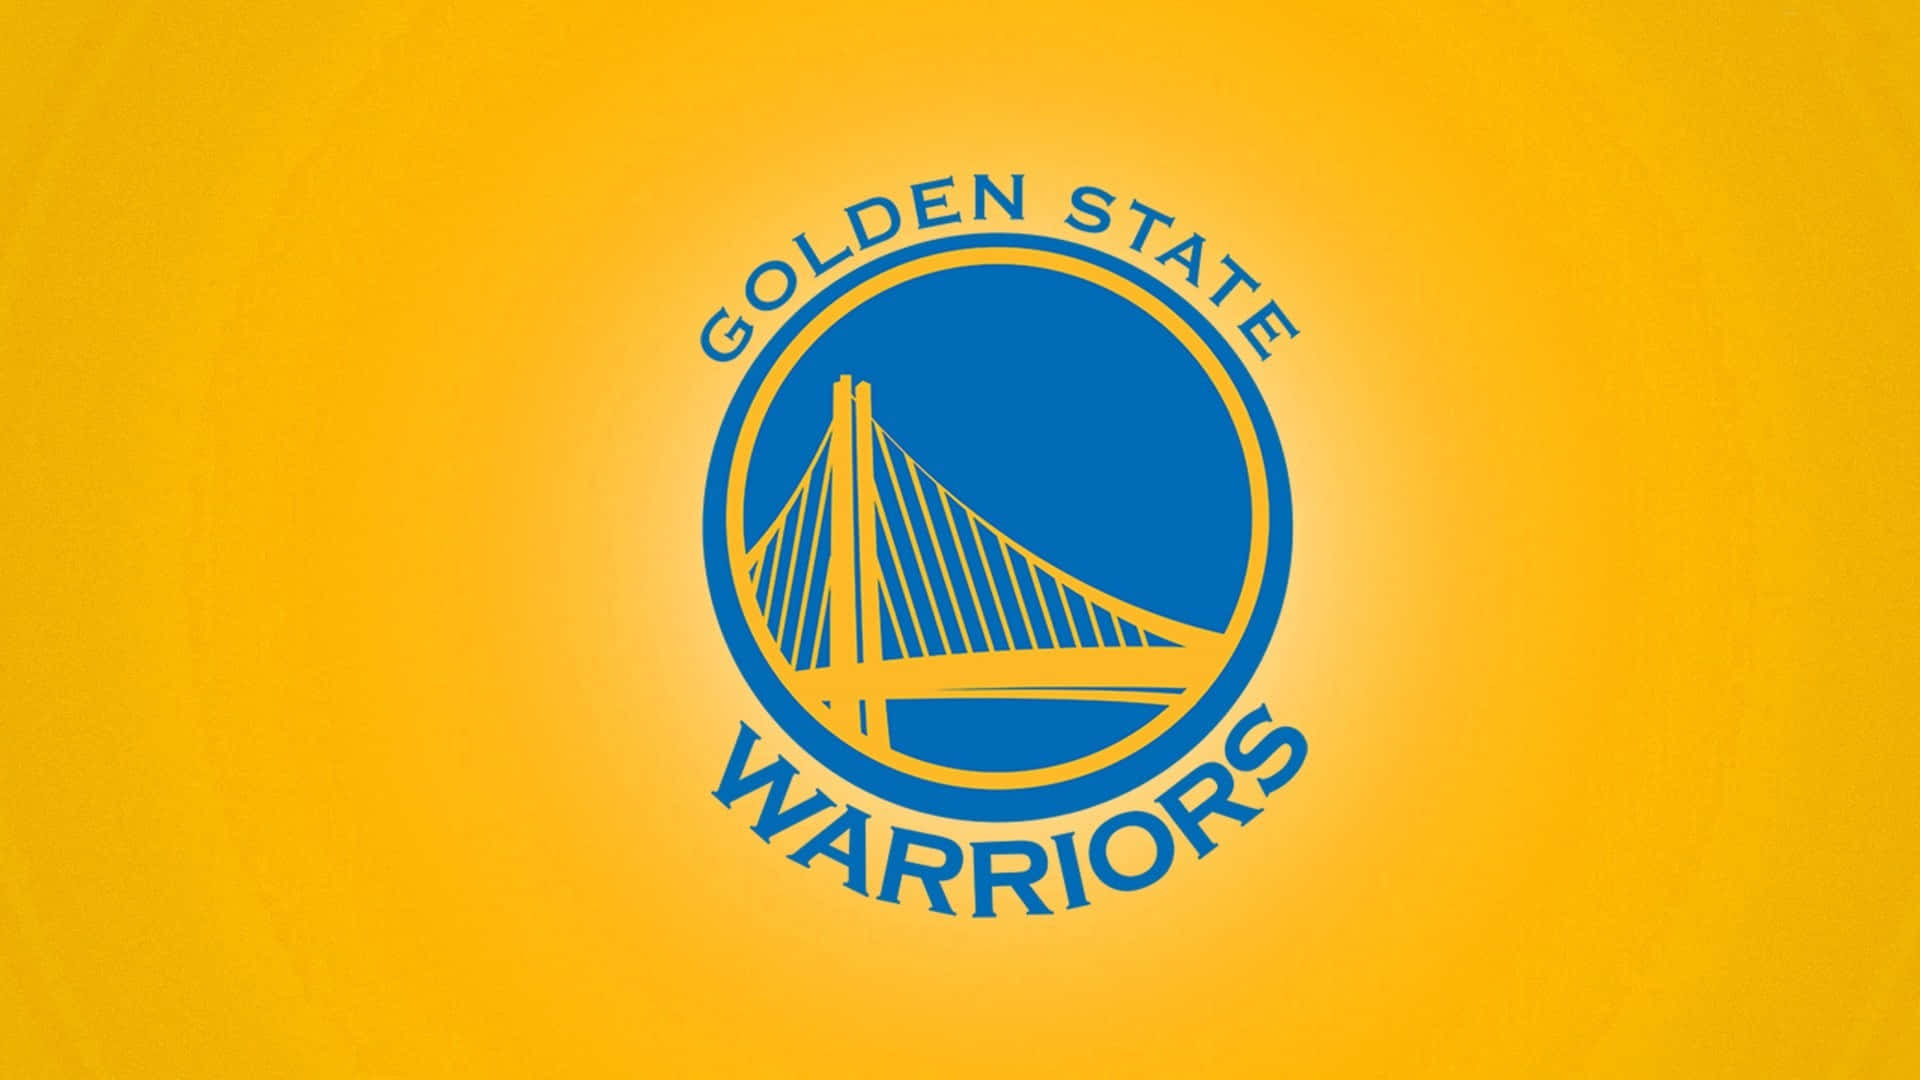 Mostreo Seu Apoio Ao Golden State Warriors Com O Seu Logotipo Oficial Para Wallpaper Do Computador Ou Celular. Papel de Parede